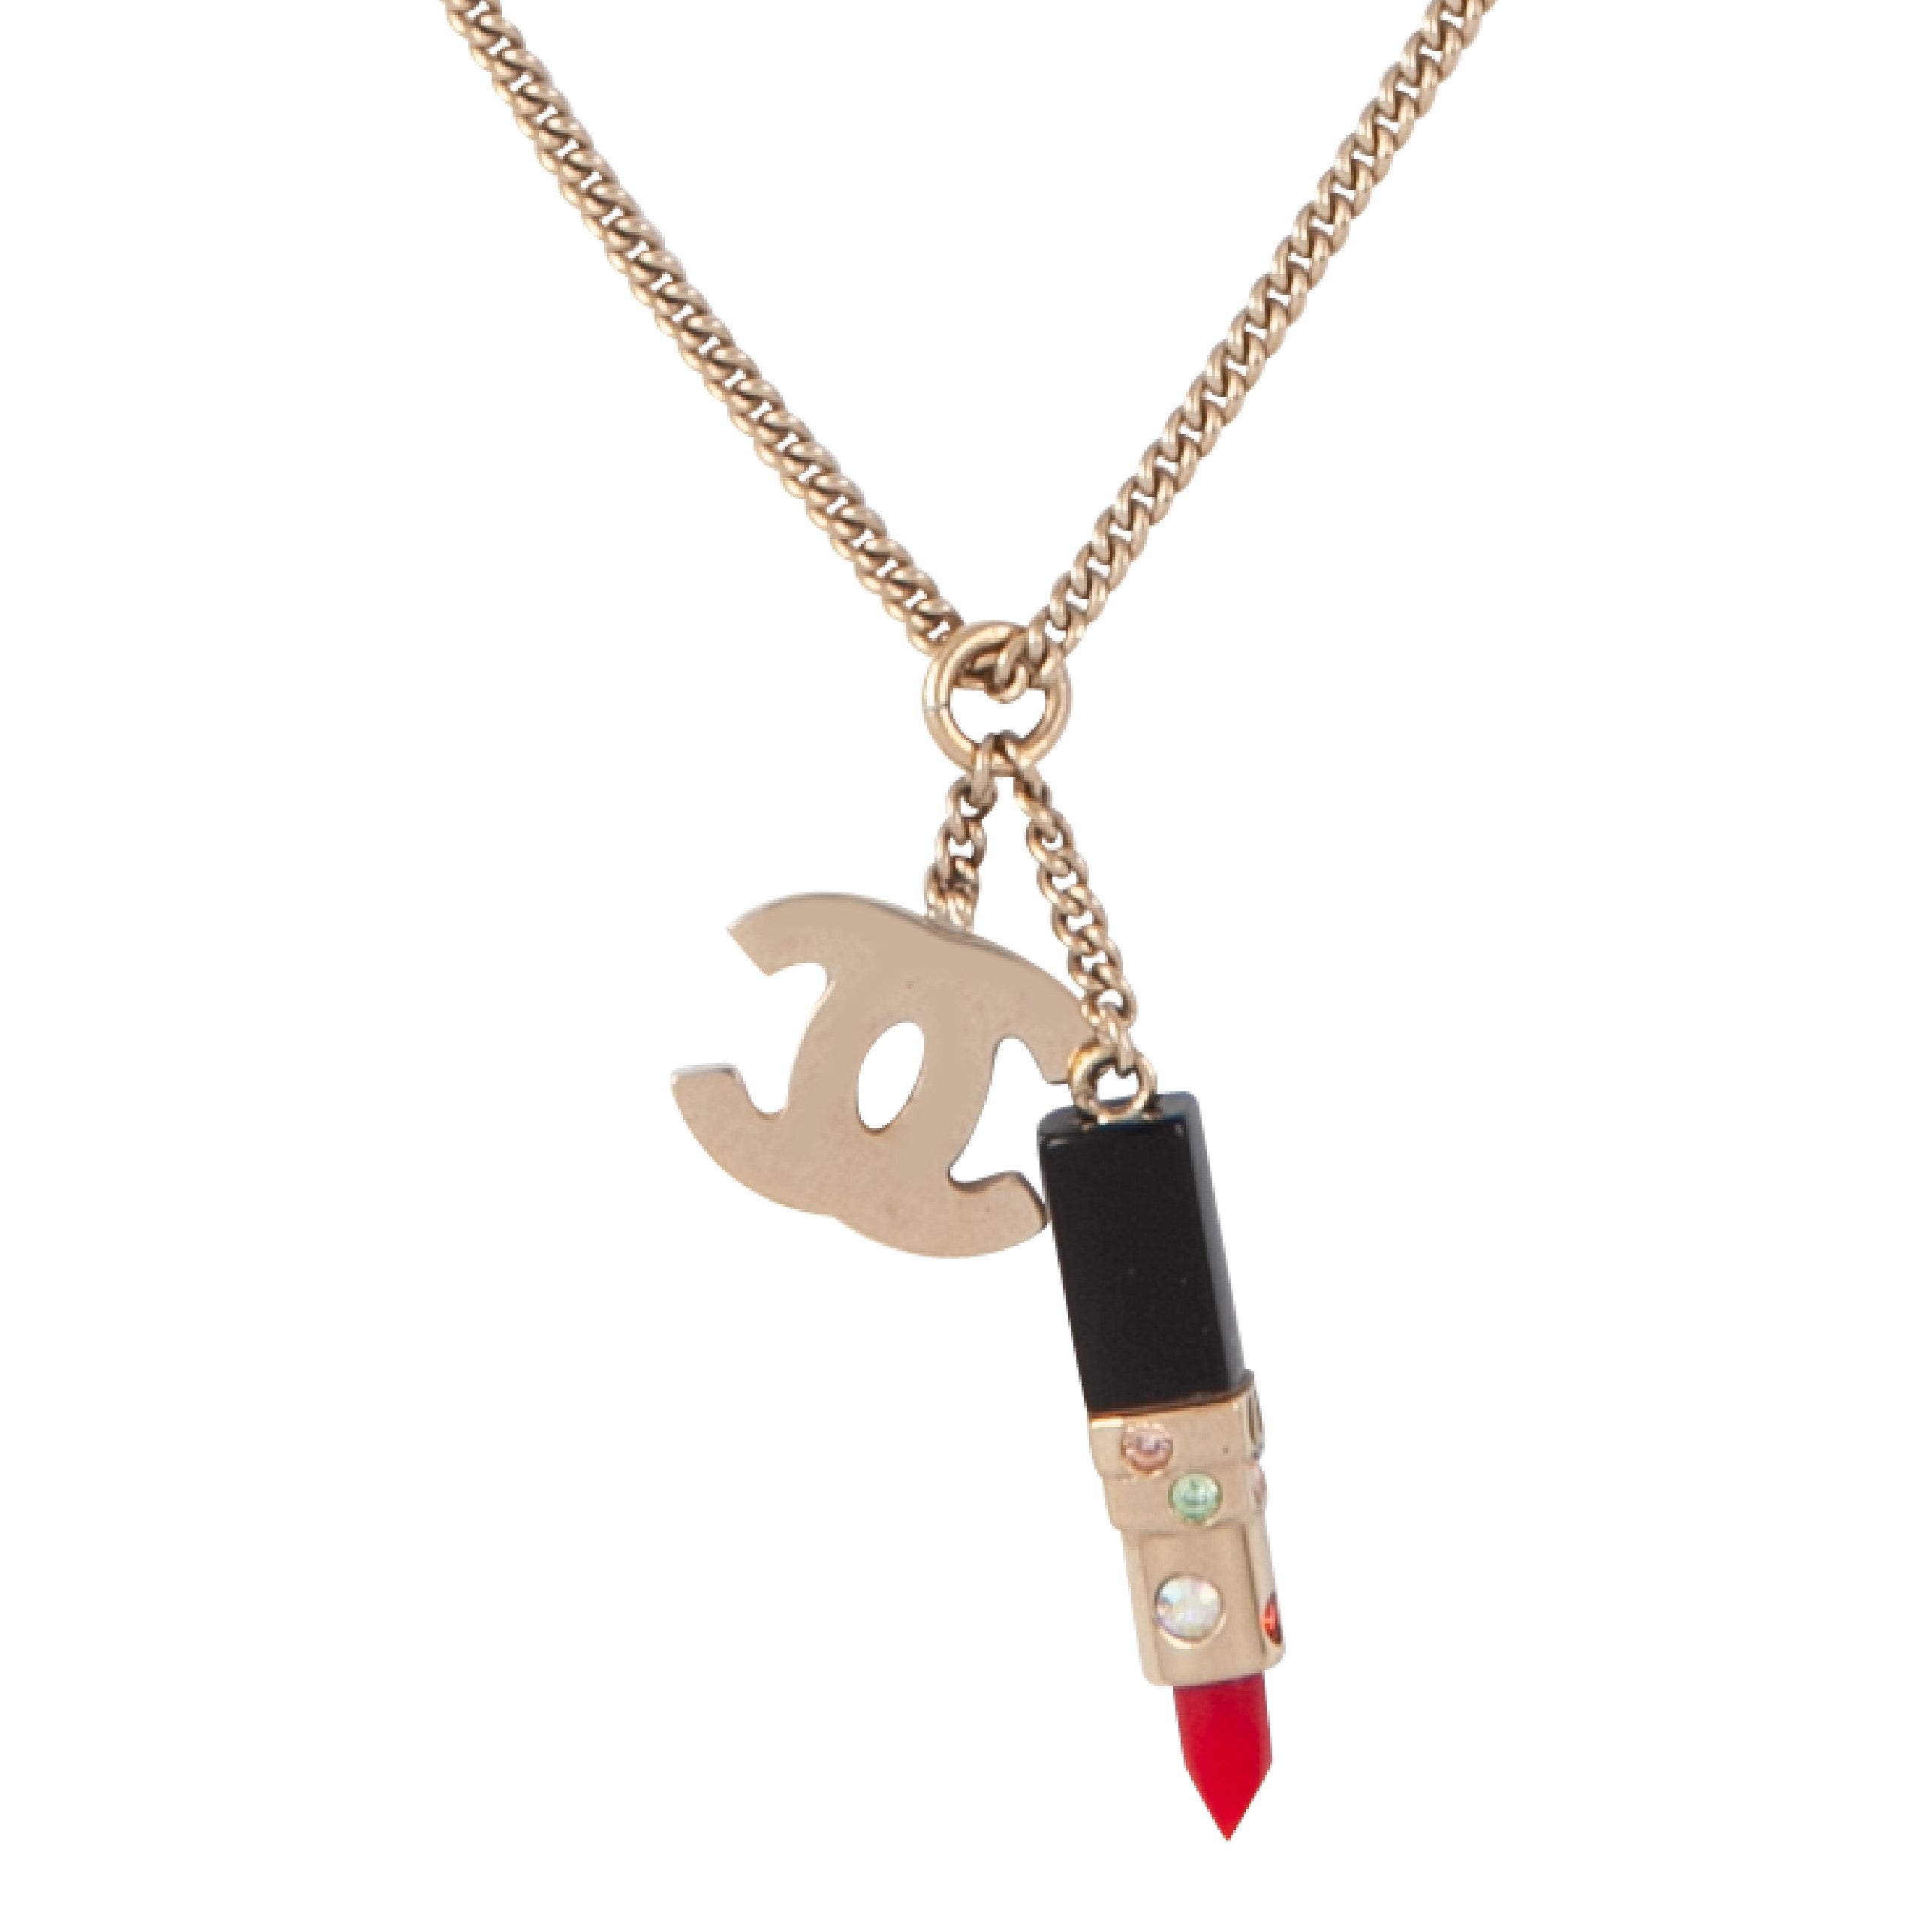 2004 Chanel Lipstick Pendant Necklace